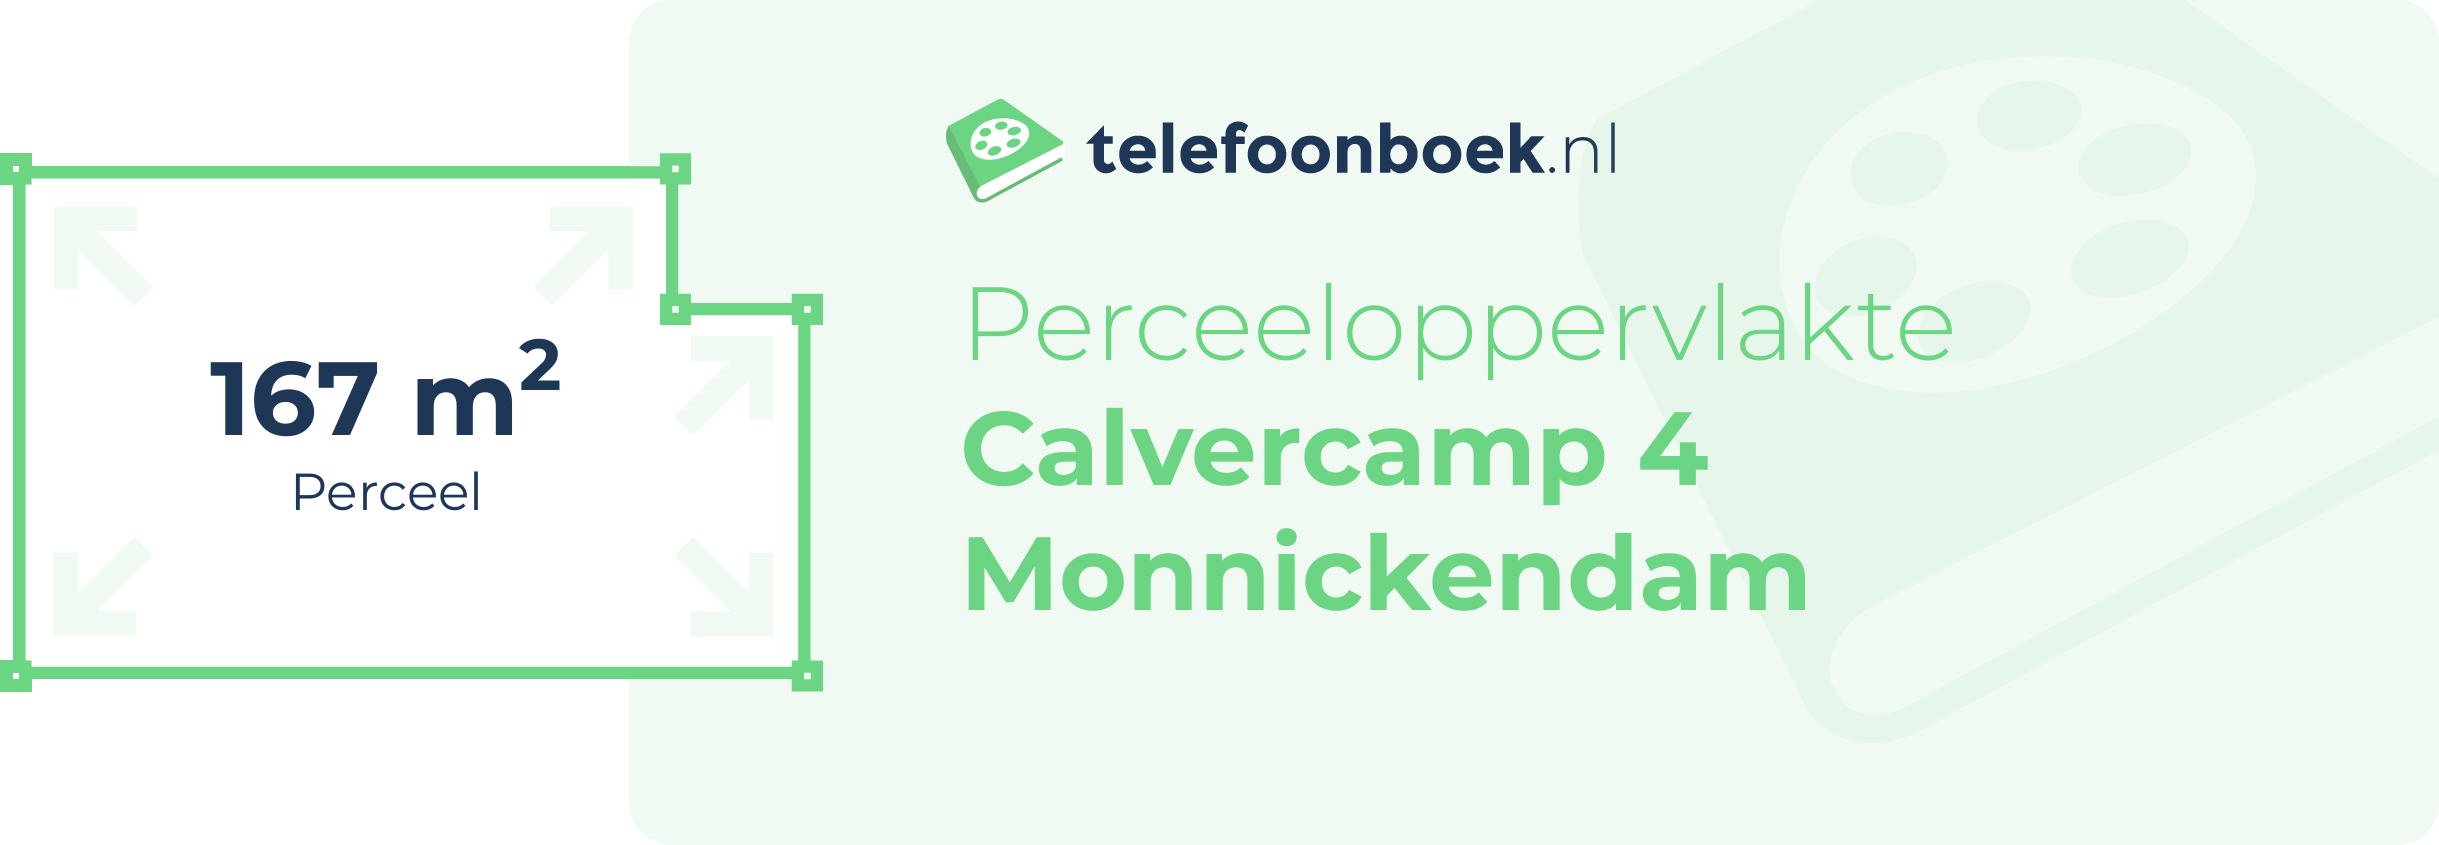 Perceeloppervlakte Calvercamp 4 Monnickendam